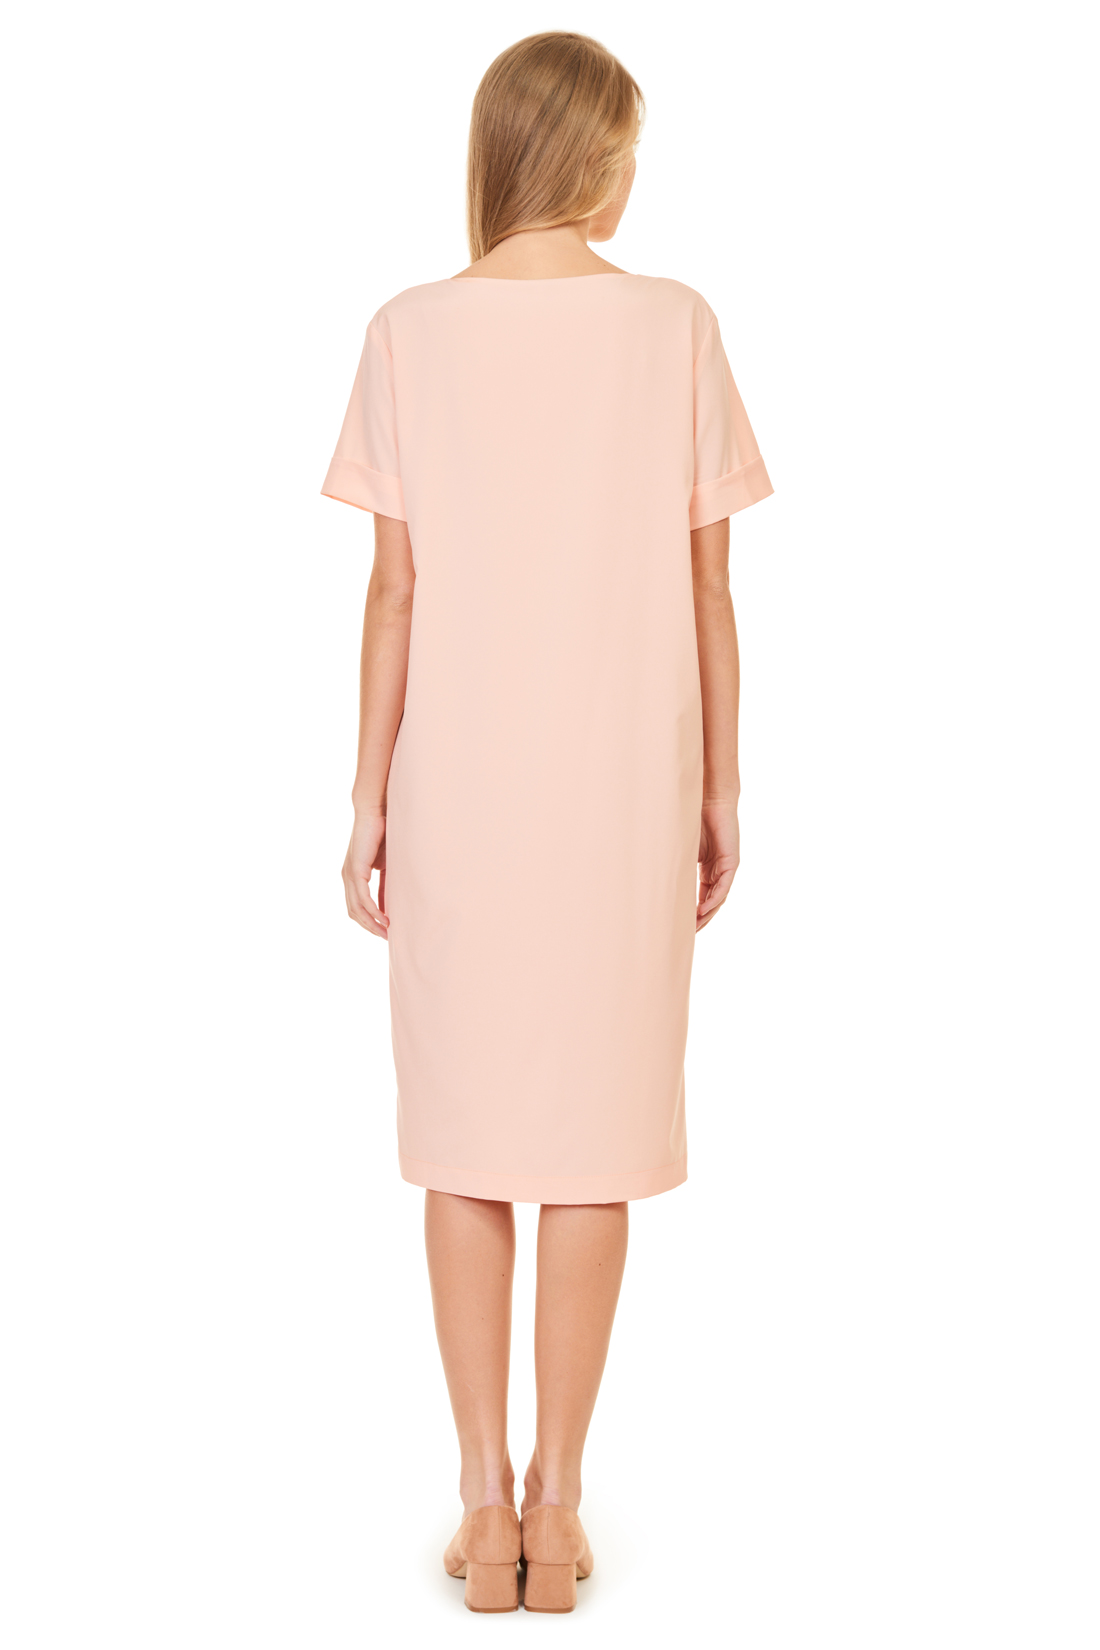 Платье-футболка (арт. baon B457111), размер XS, цвет розовый Платье-футболка (арт. baon B457111) - фото 2